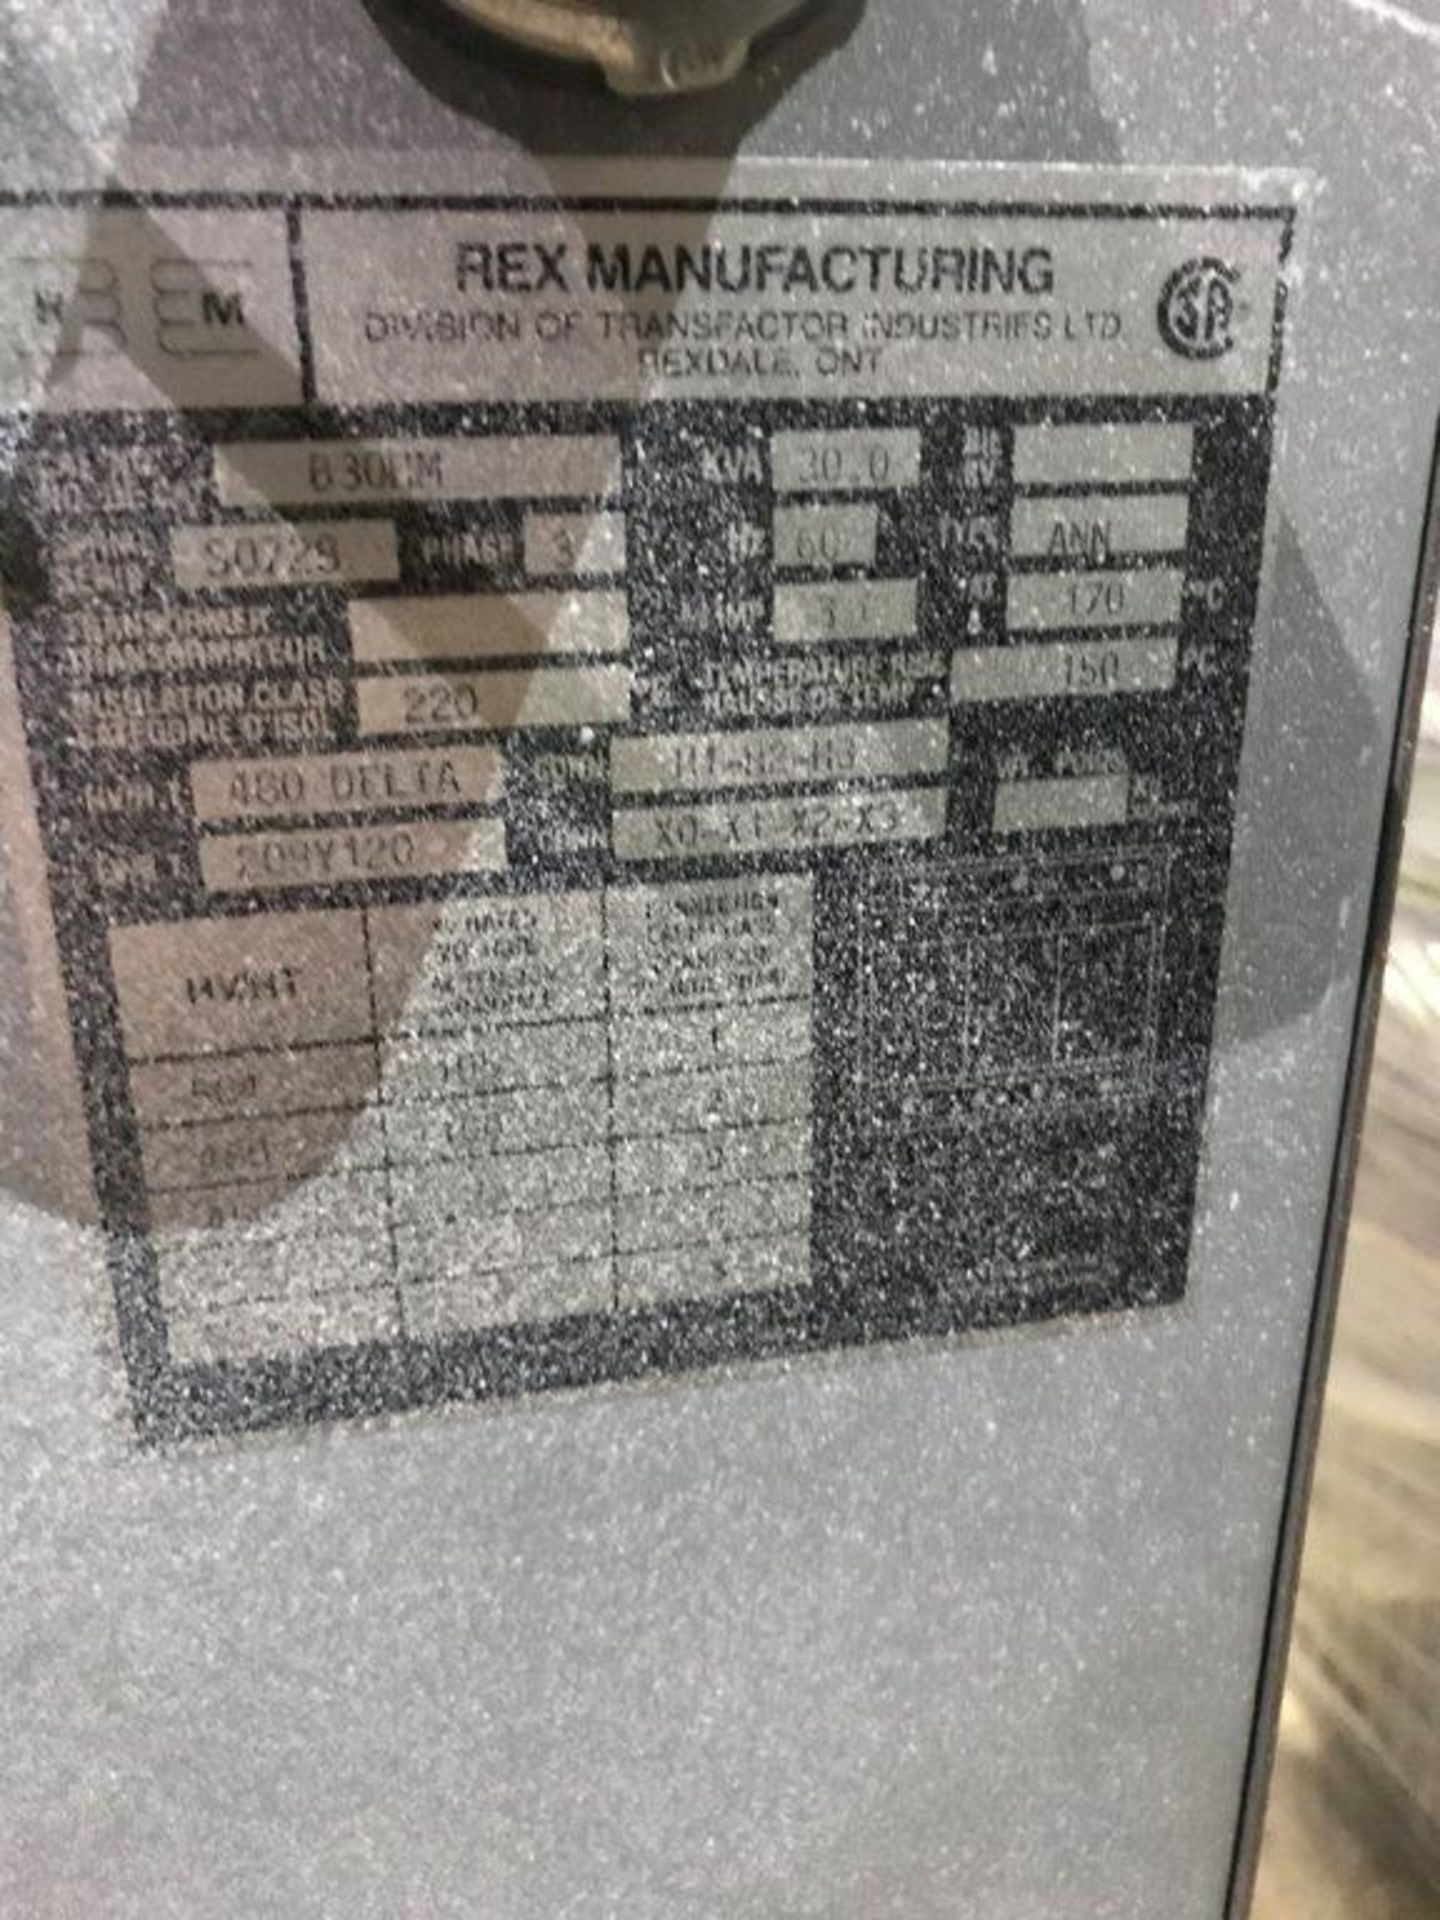 Rex Manufacturing 30kVA Transformer 480v pri 208y/120v Secondary 3ph - Image 2 of 2